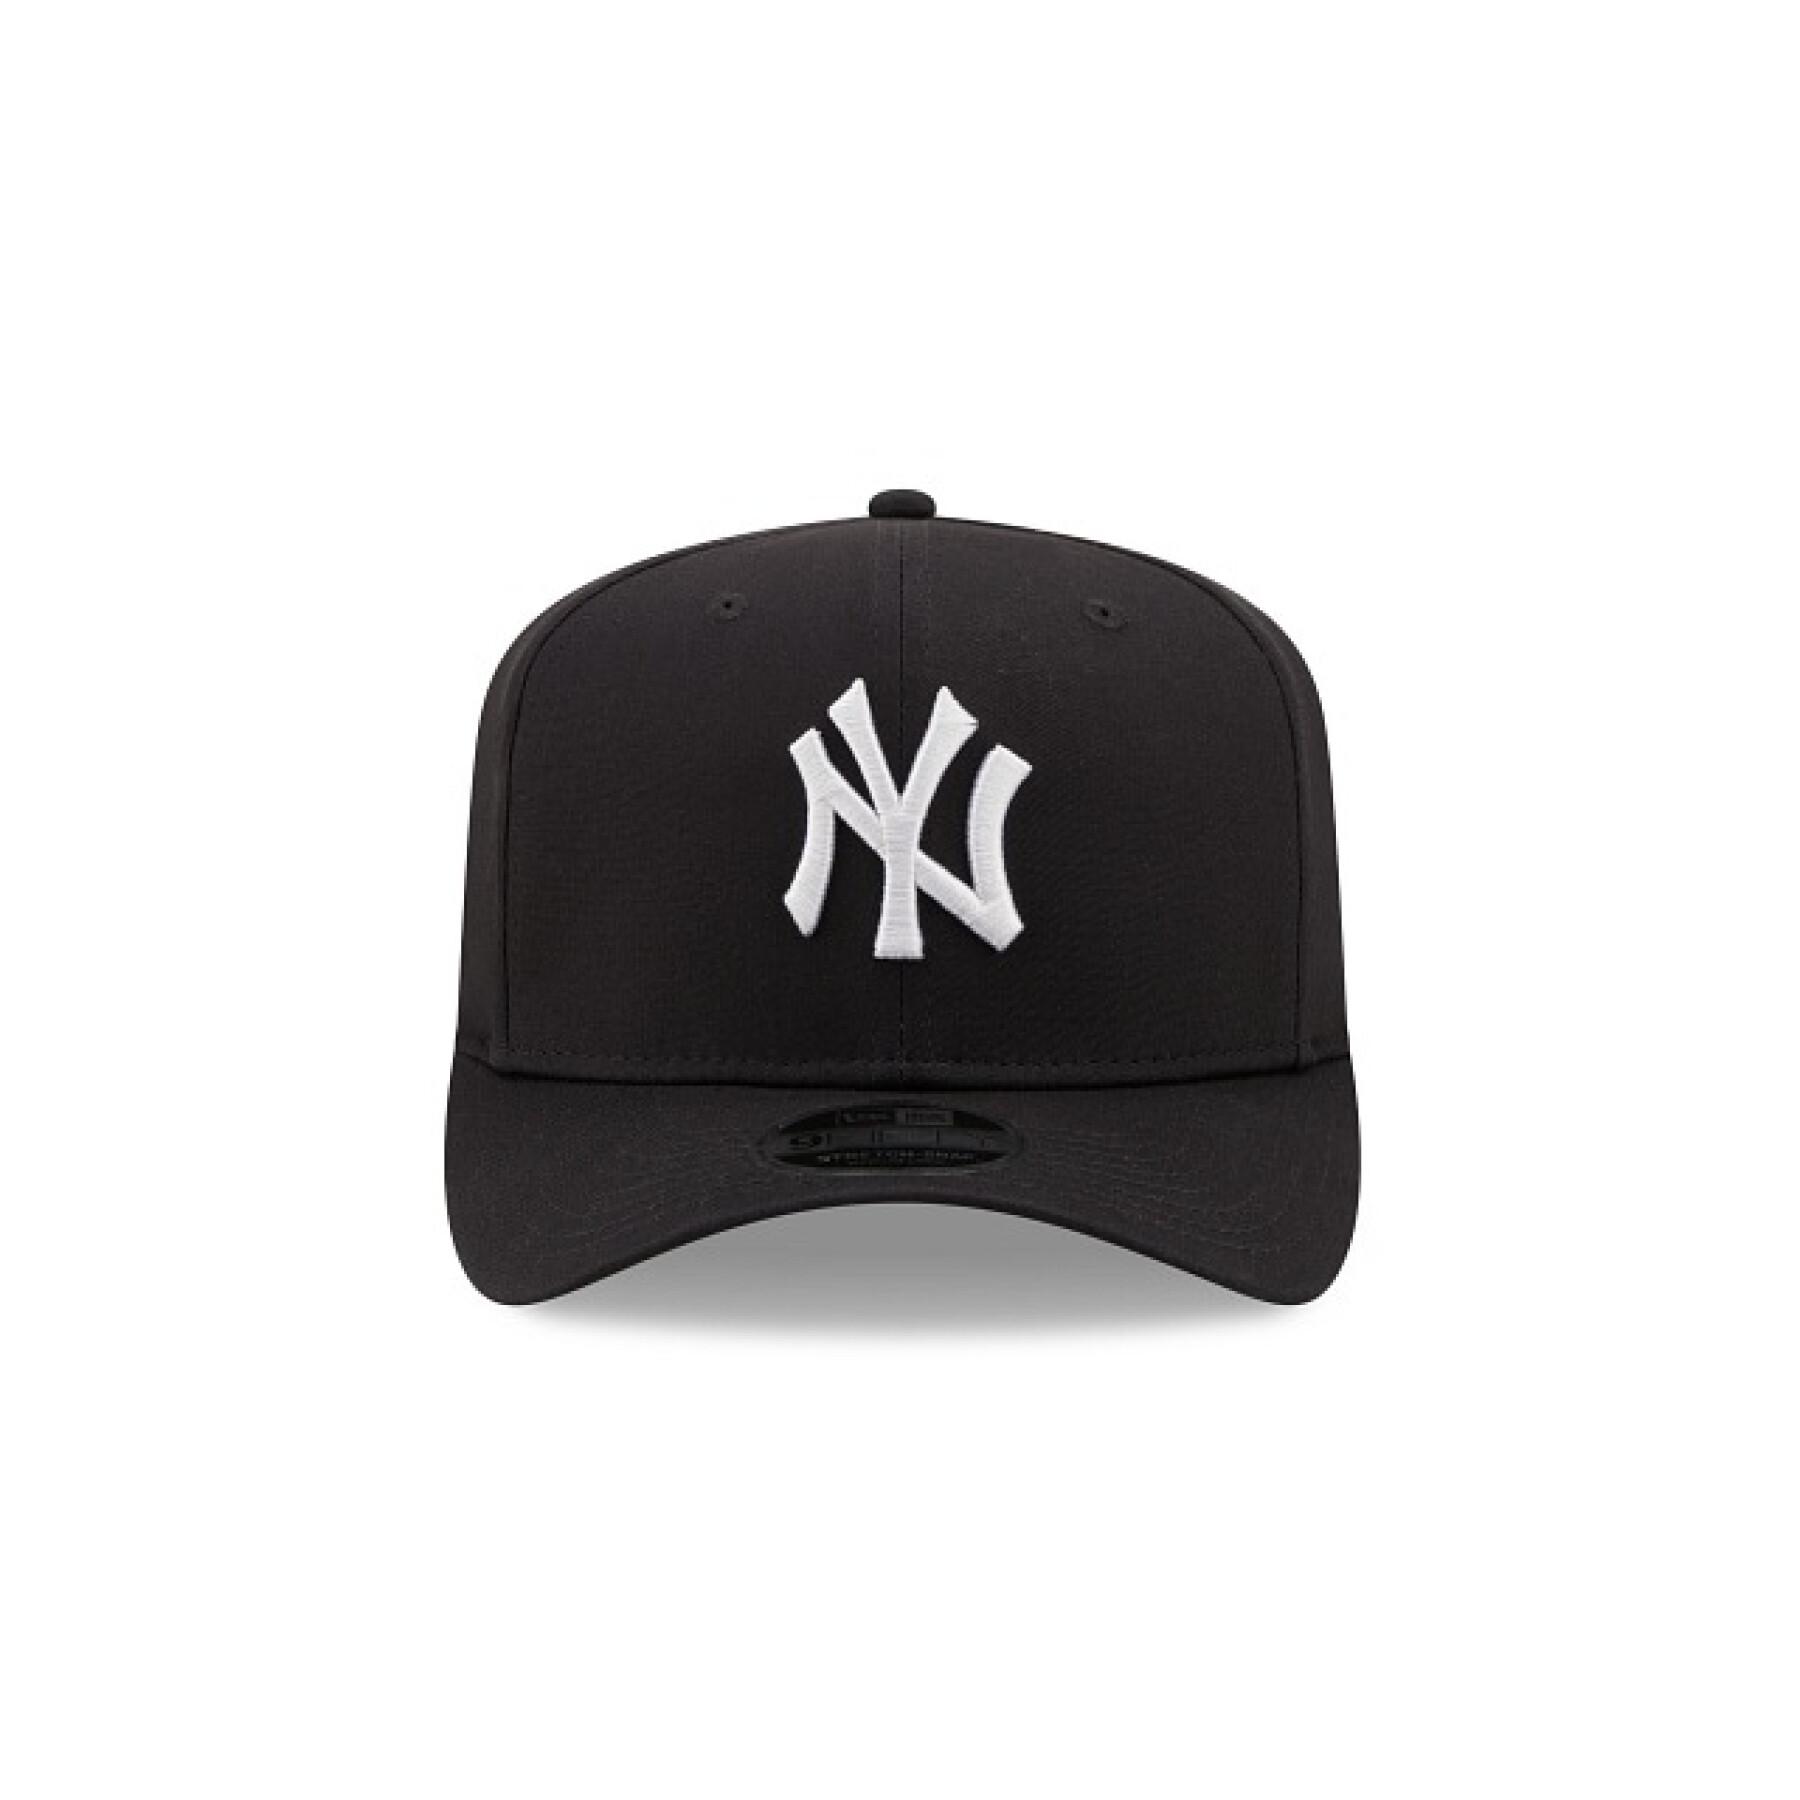 Gorra 9fifty New York Yankees